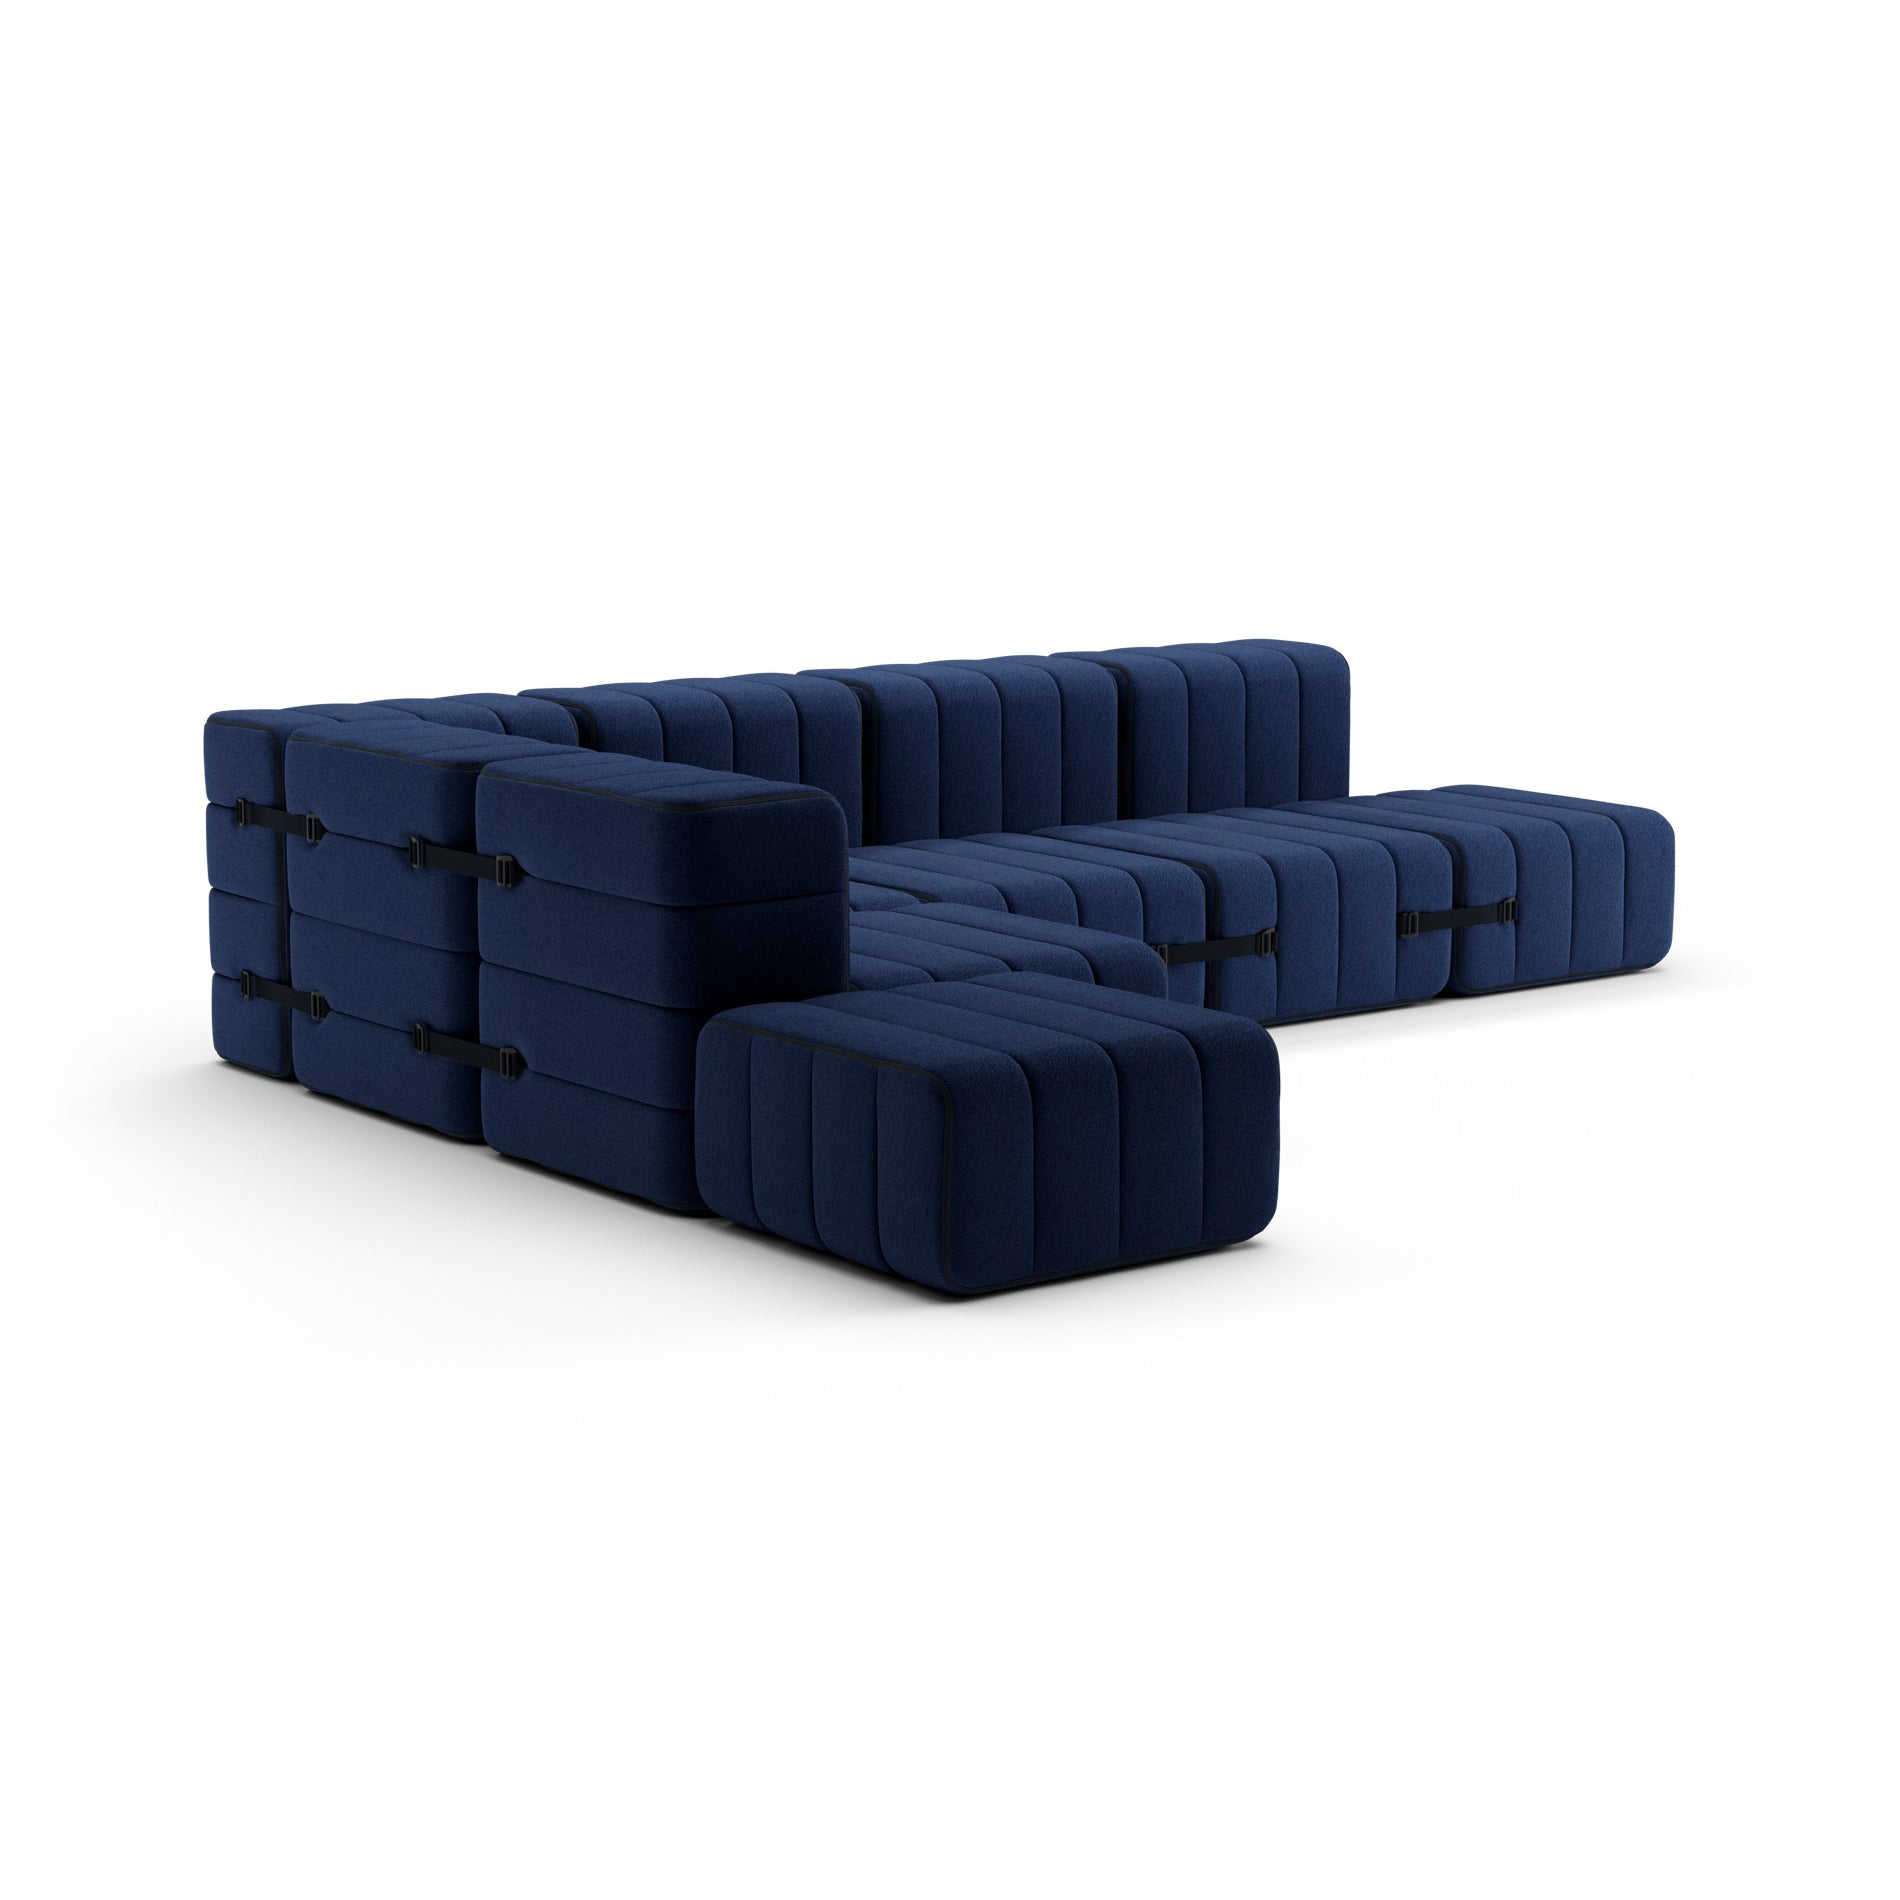 Curt Sofa System - Jet Dark Blue - THAT COOL LIVING